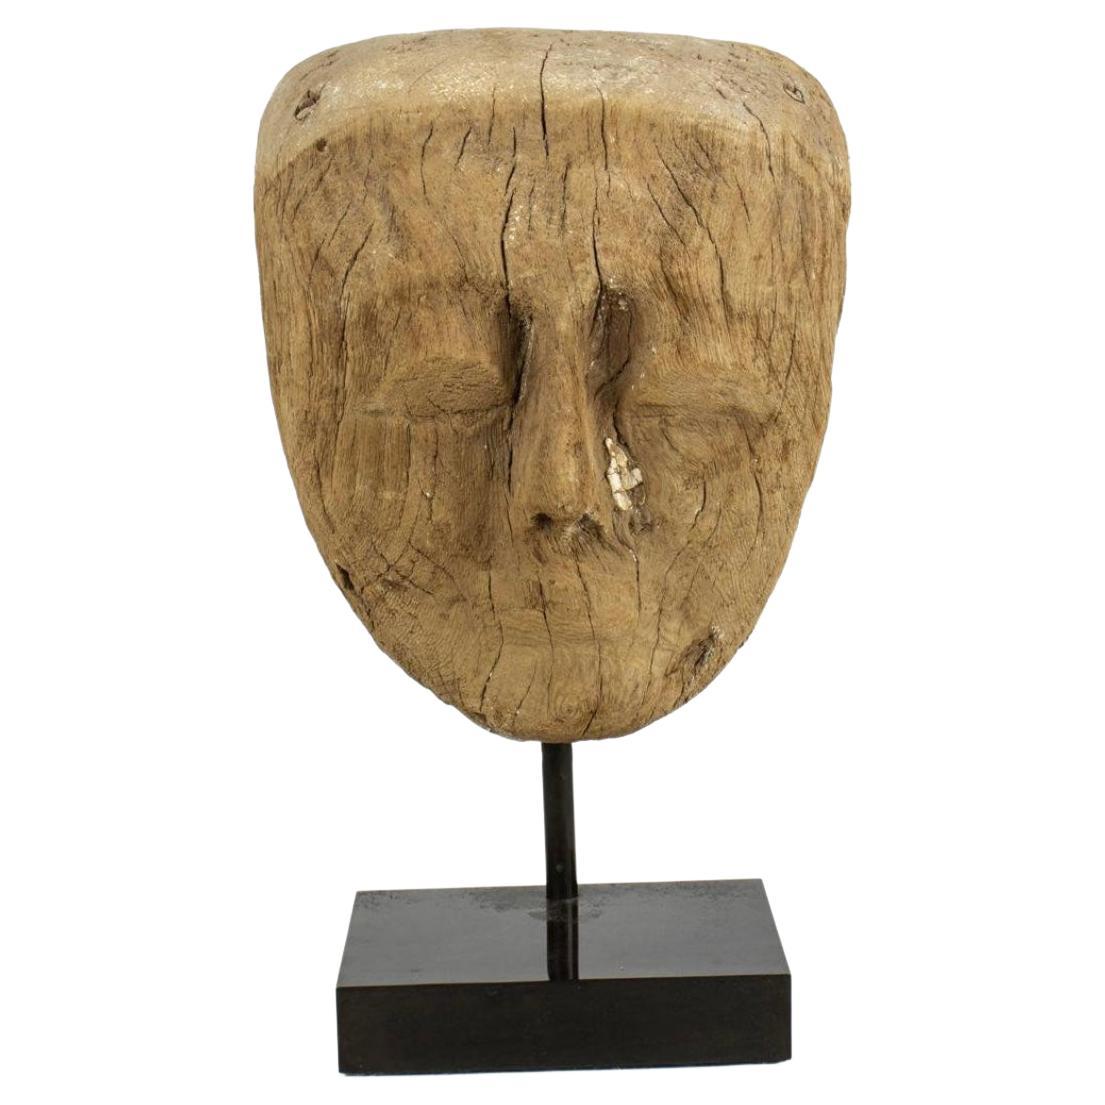 Ancient Egyptian Mask, 900-600 BCE